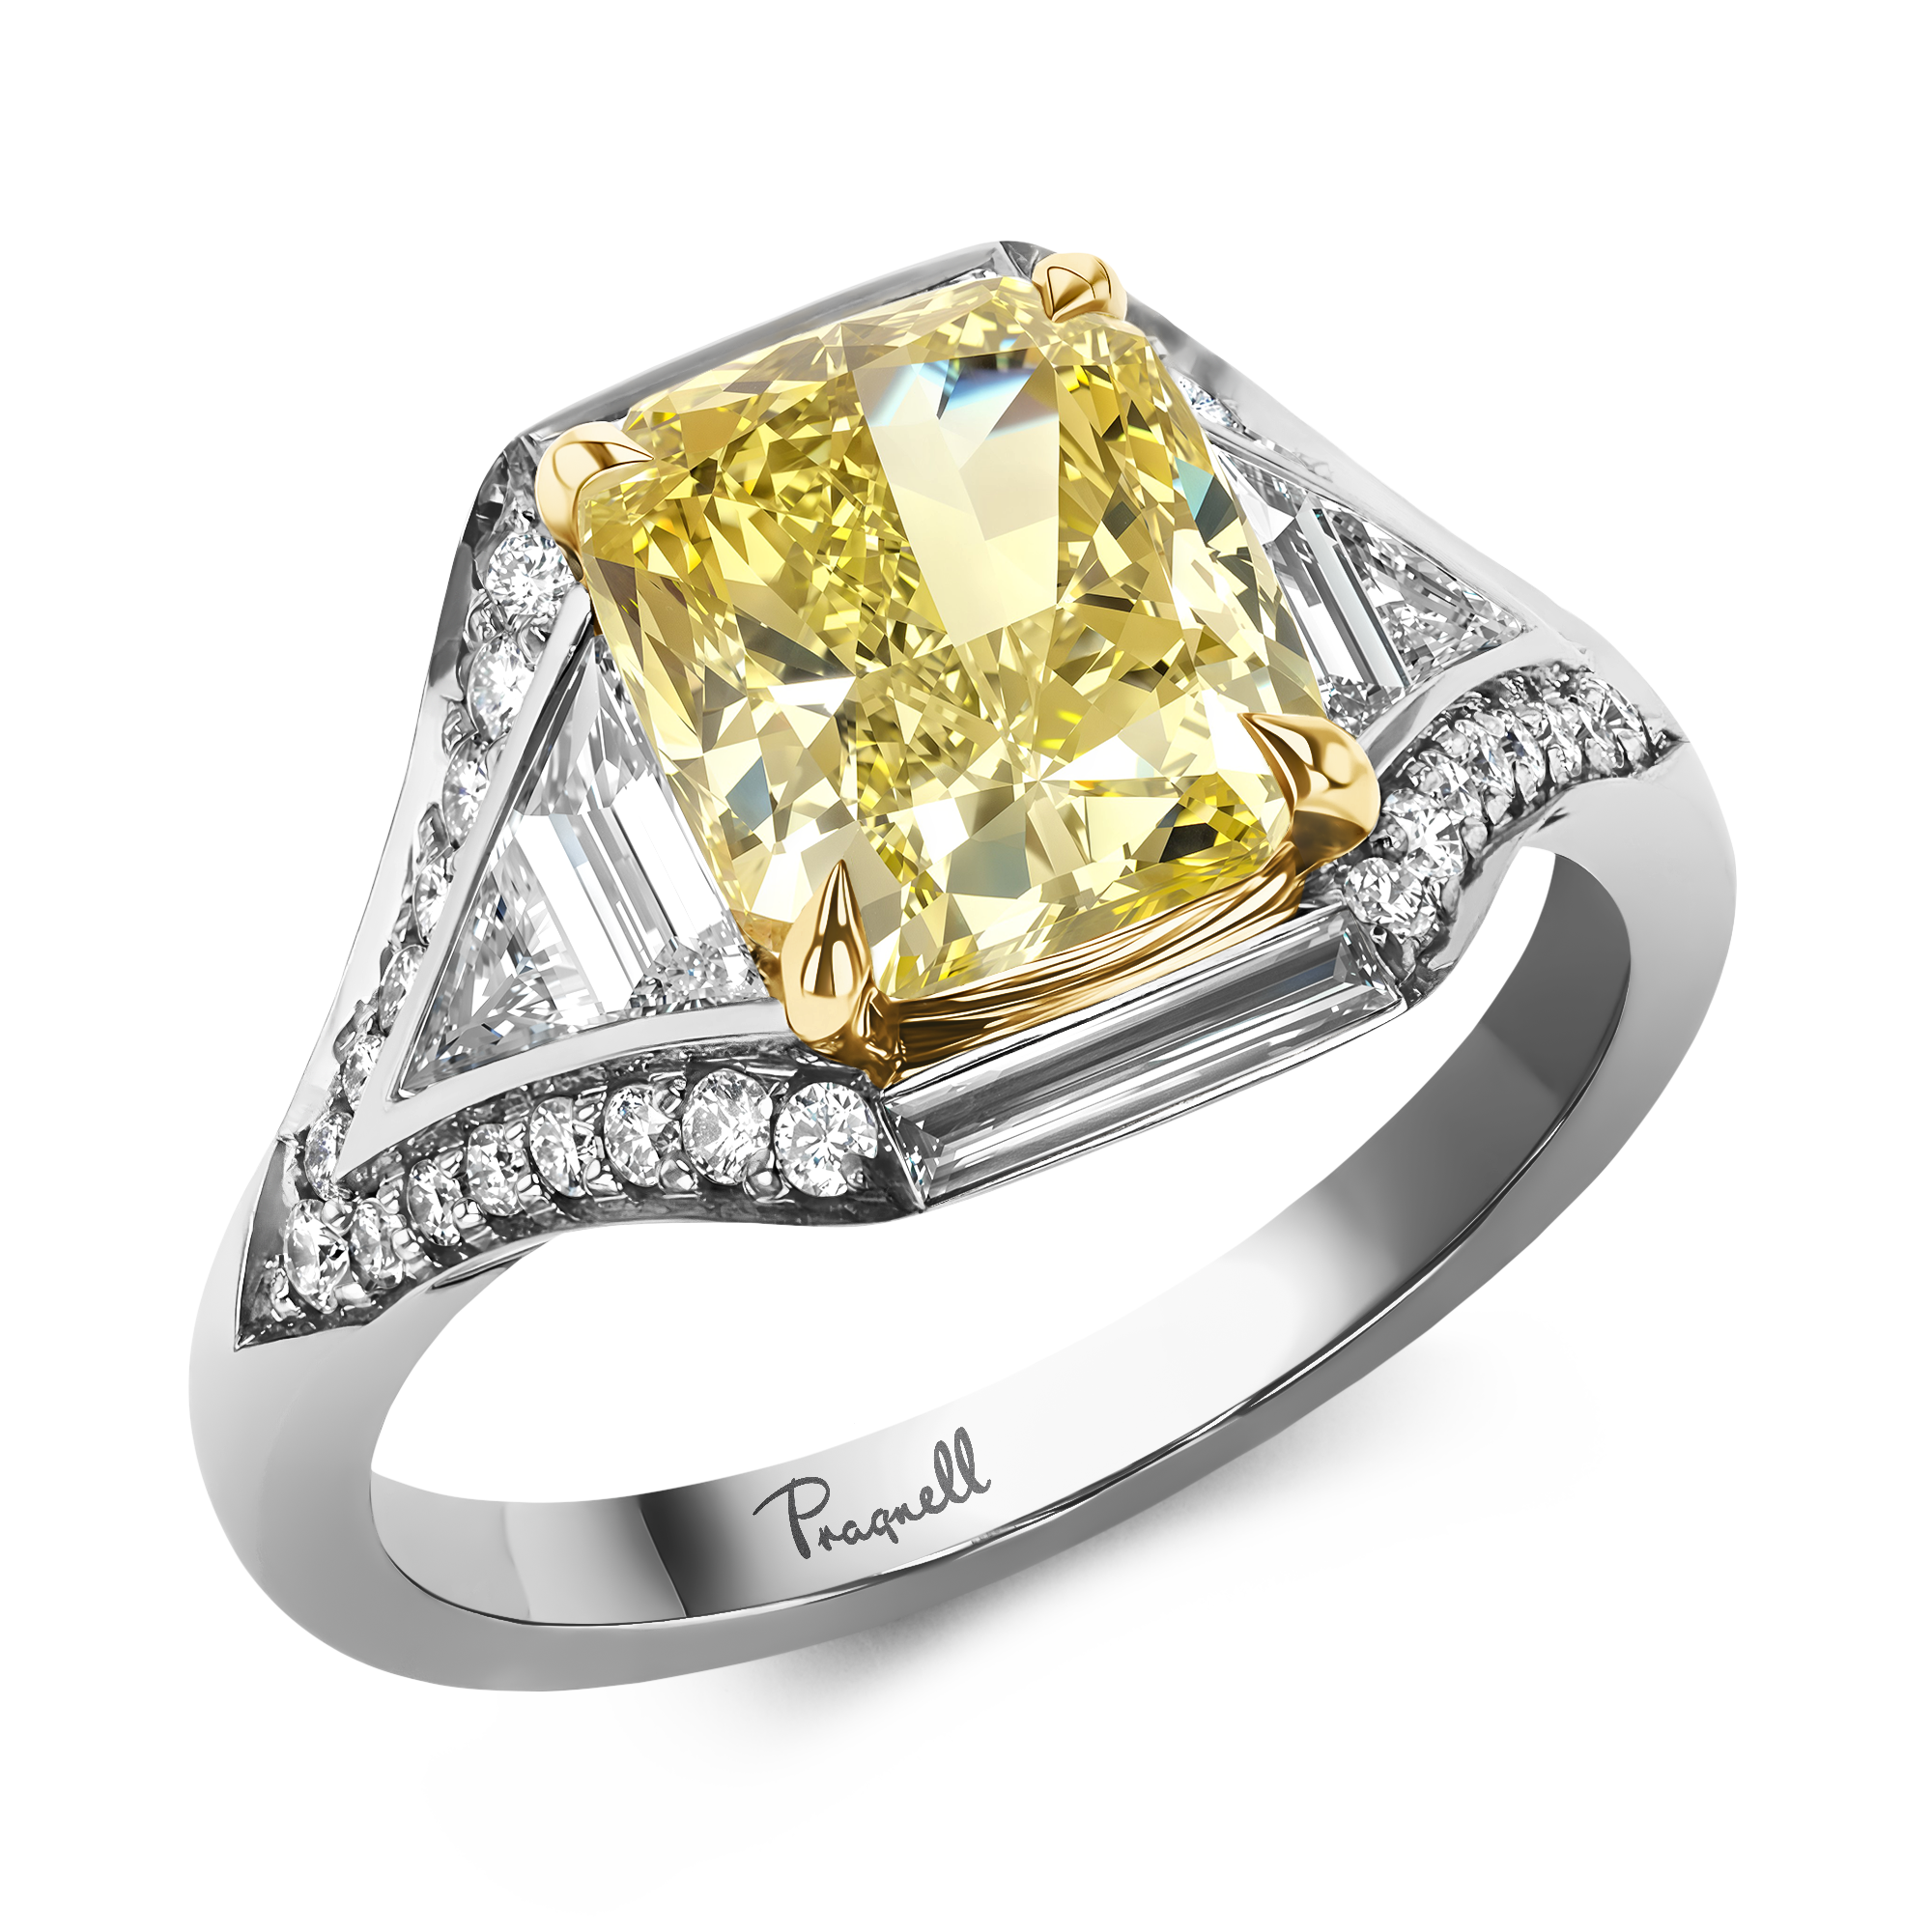 Masterpiece Astoria 3.02ct Fancy Vivid Yellow Diamond Ring Radiant Cut, Claw Set_1